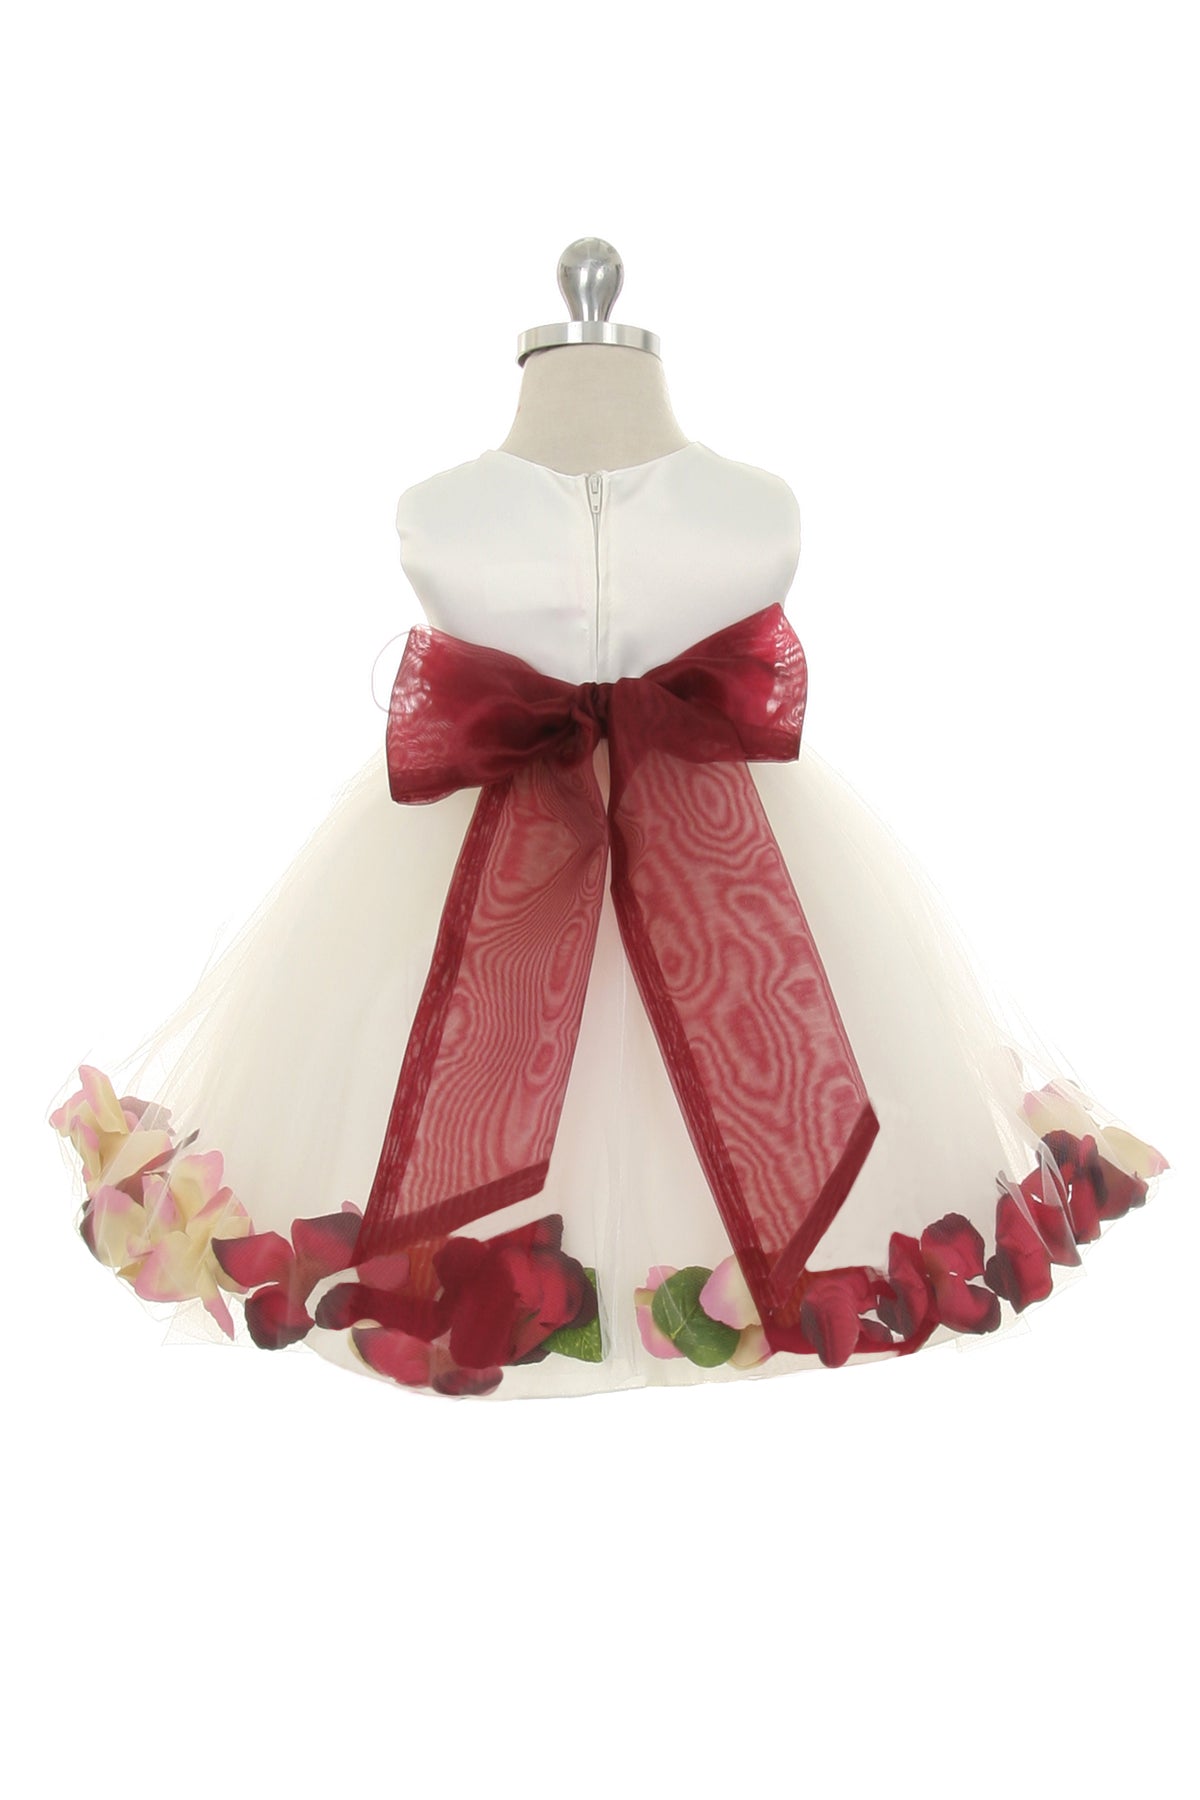 195B[SASH] Ivory Satin Flower Petal Baby Dress with Organza Sash